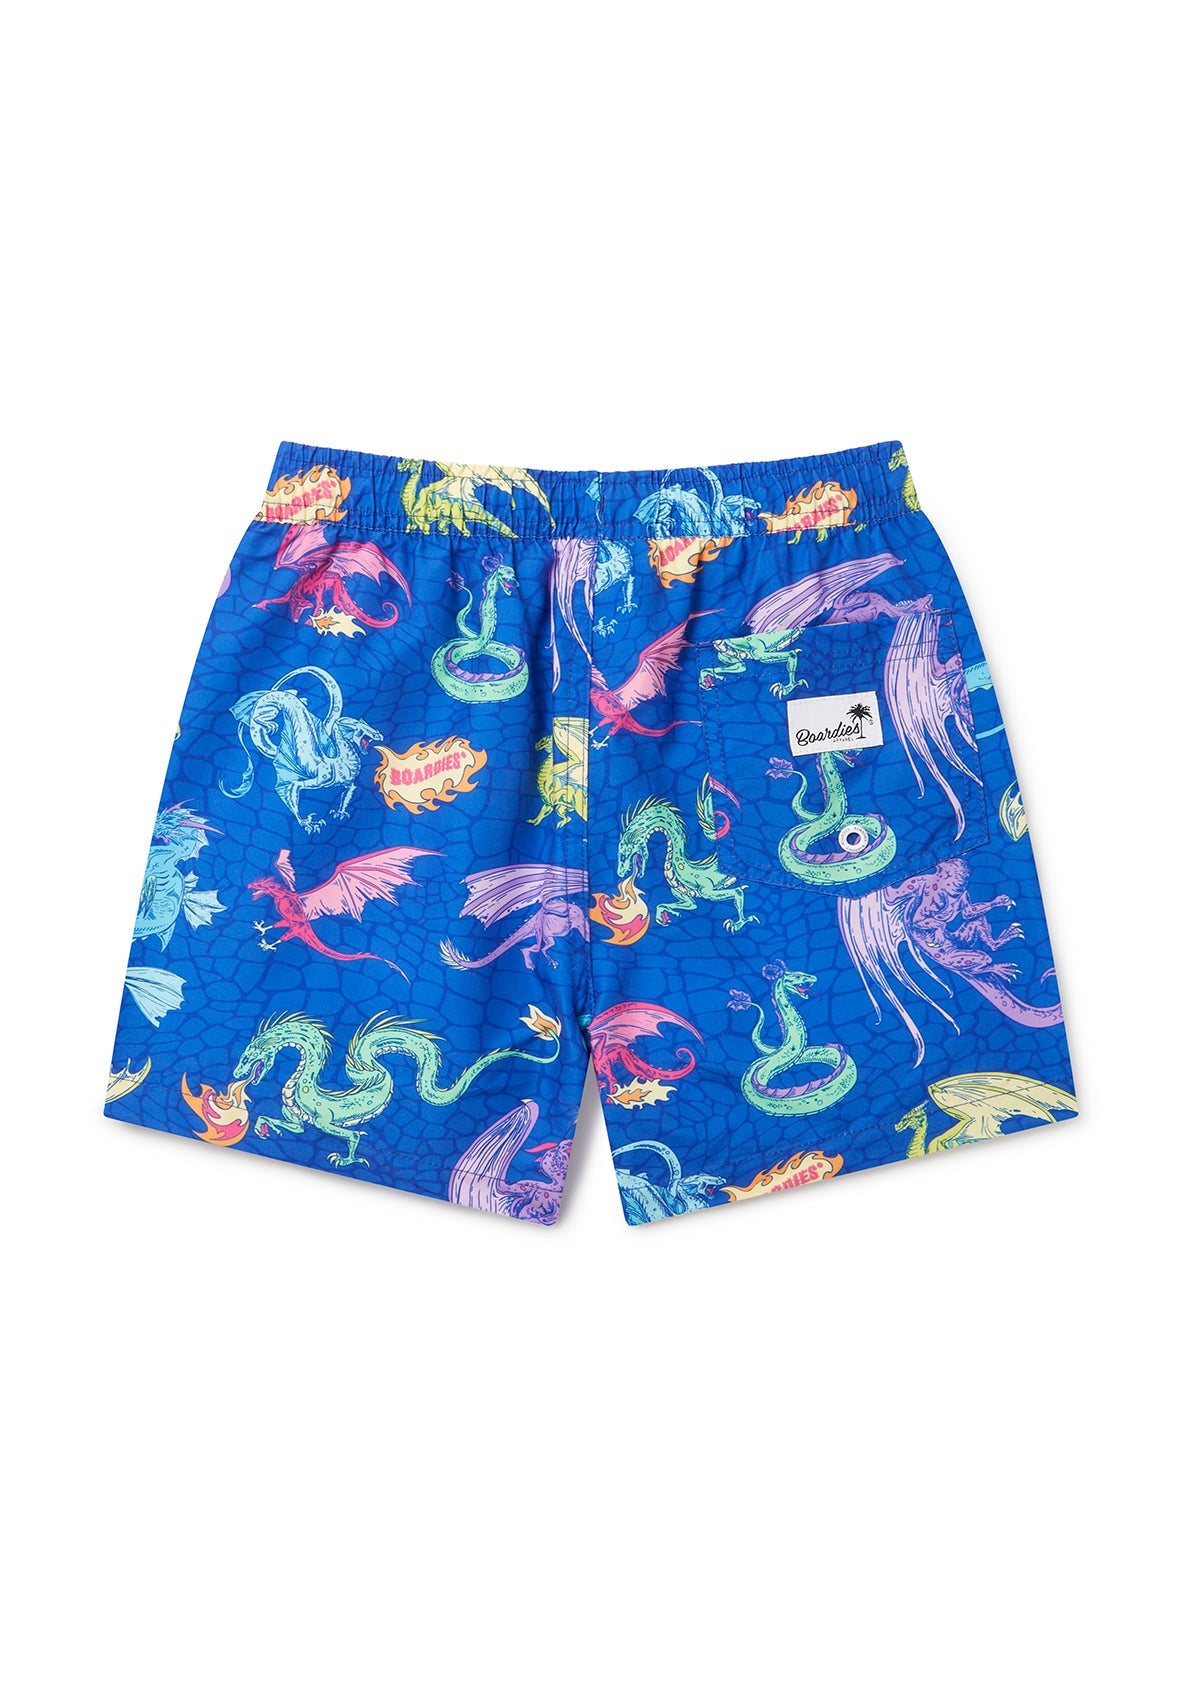 Kids Dragons Swim Shorts